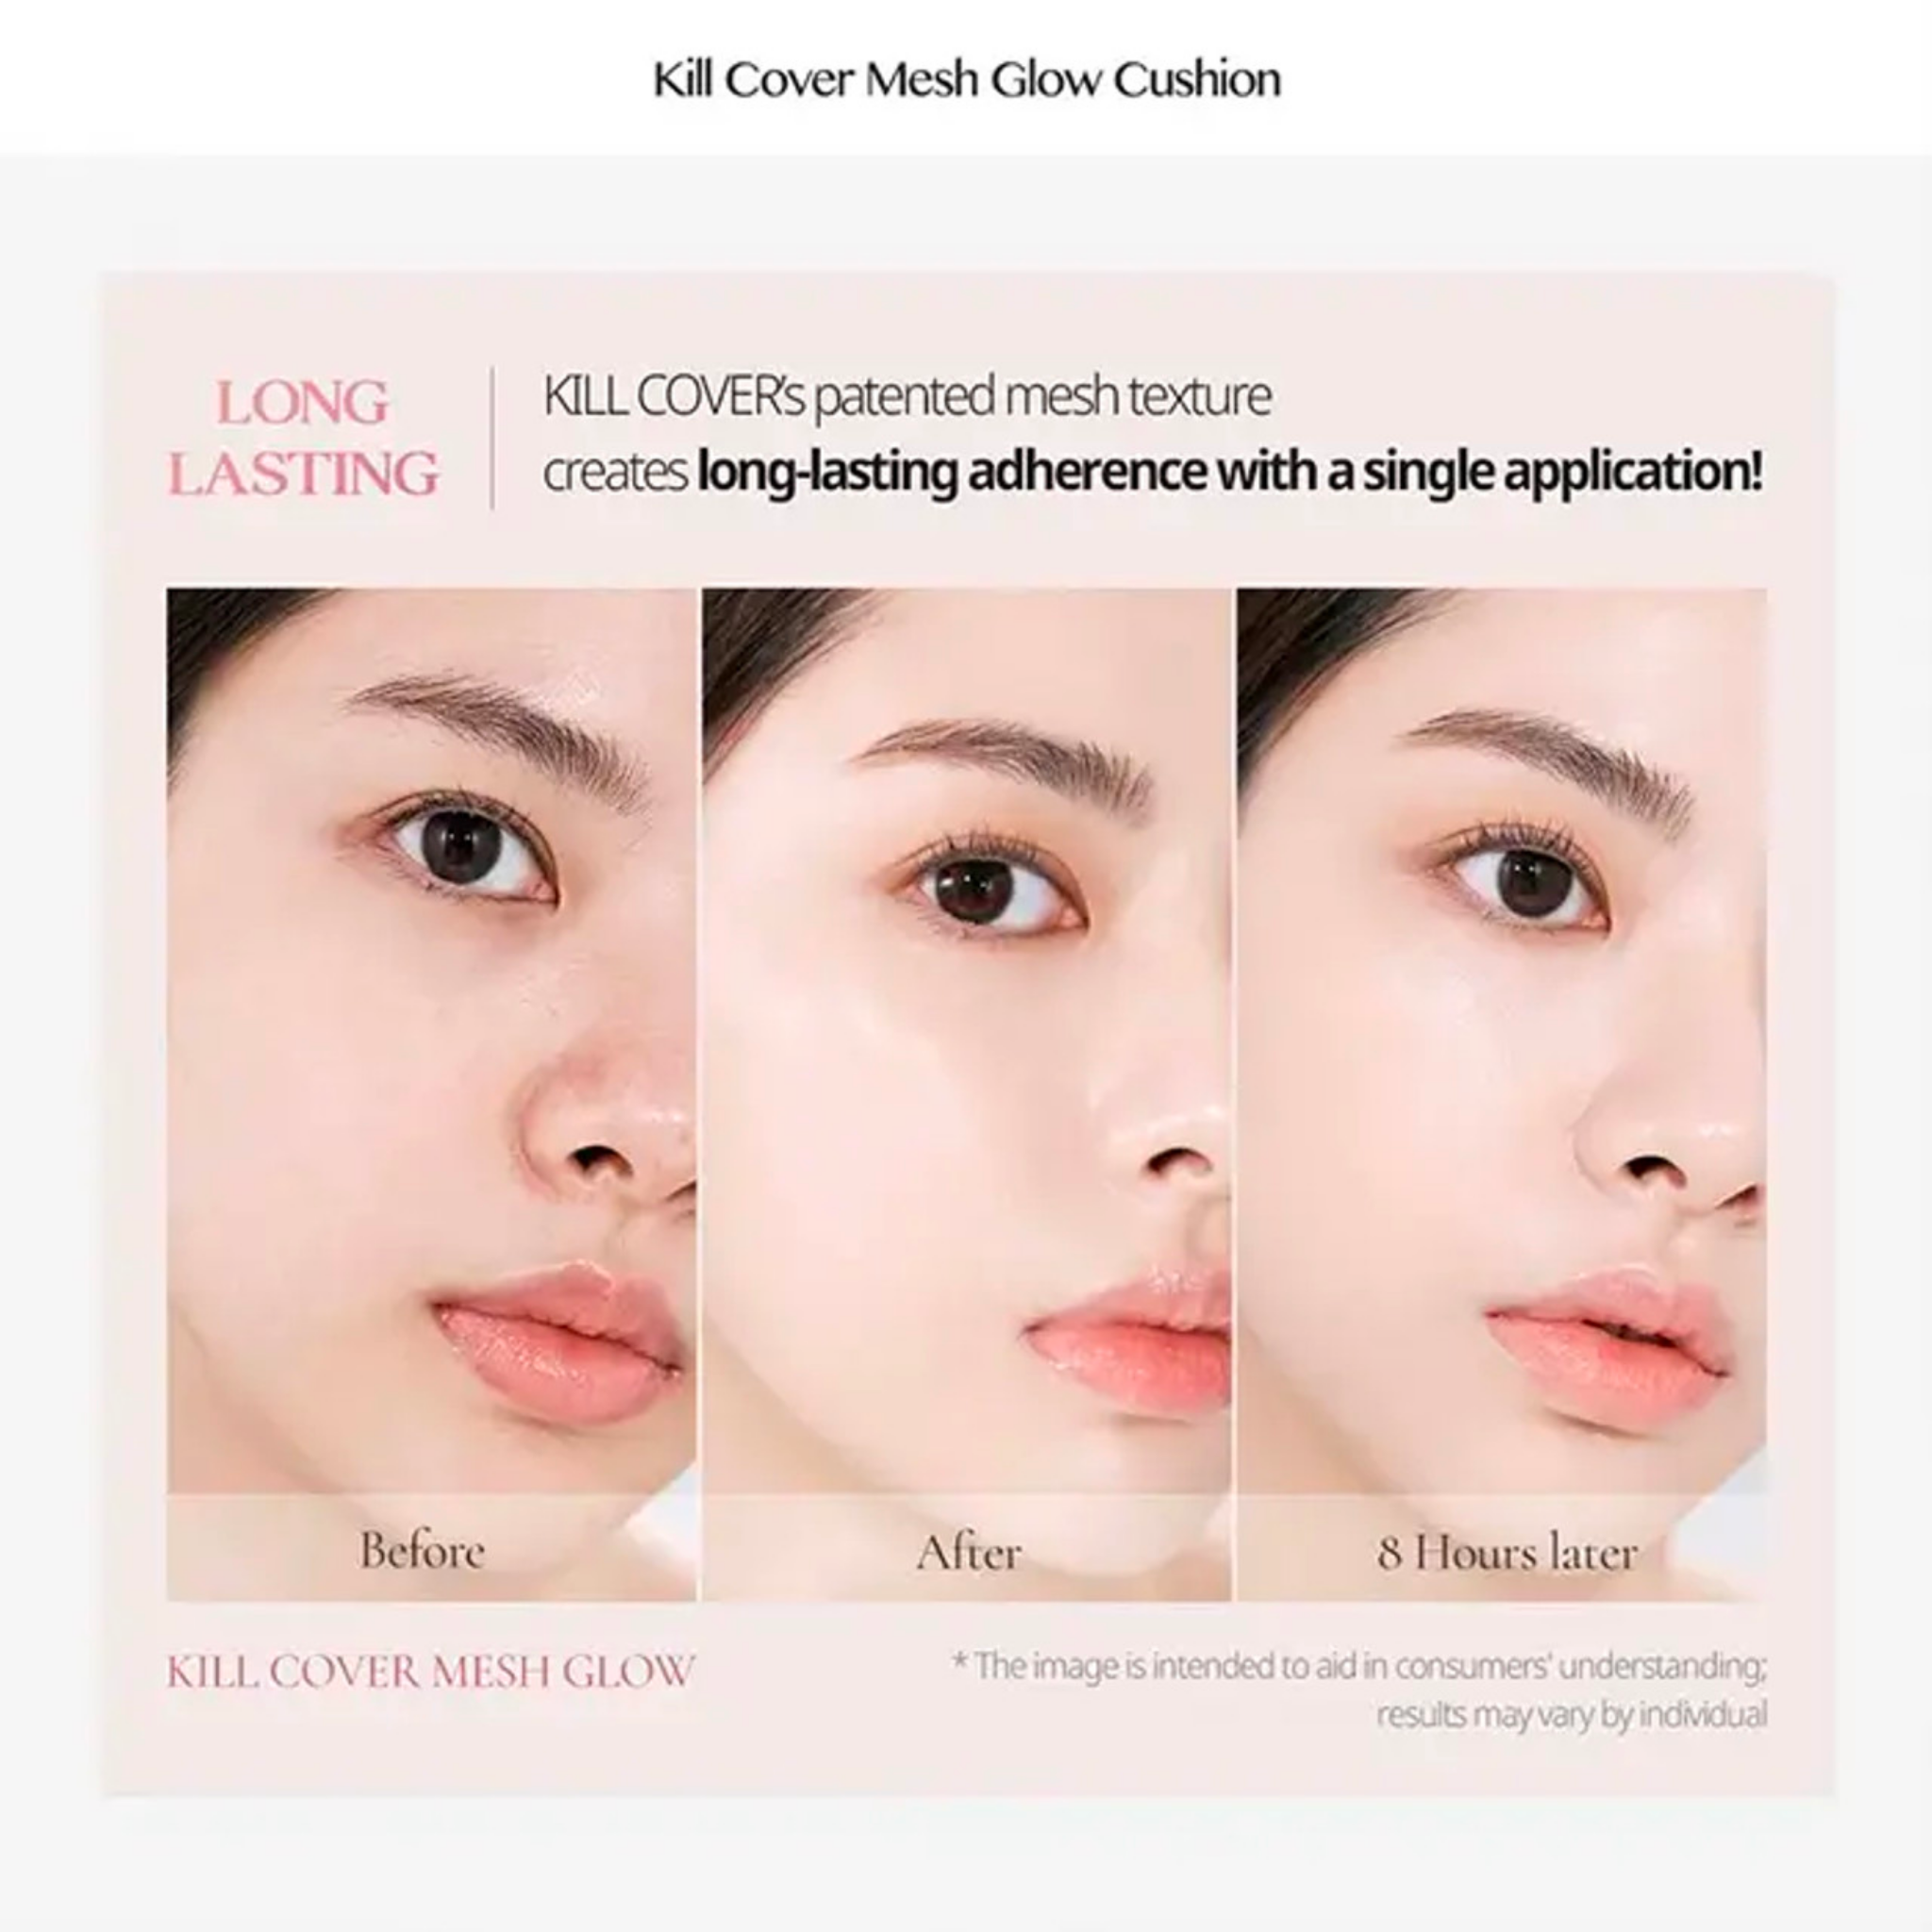 CLIO Kill Cover Mesh Glow Cushion (+Refill) on skin